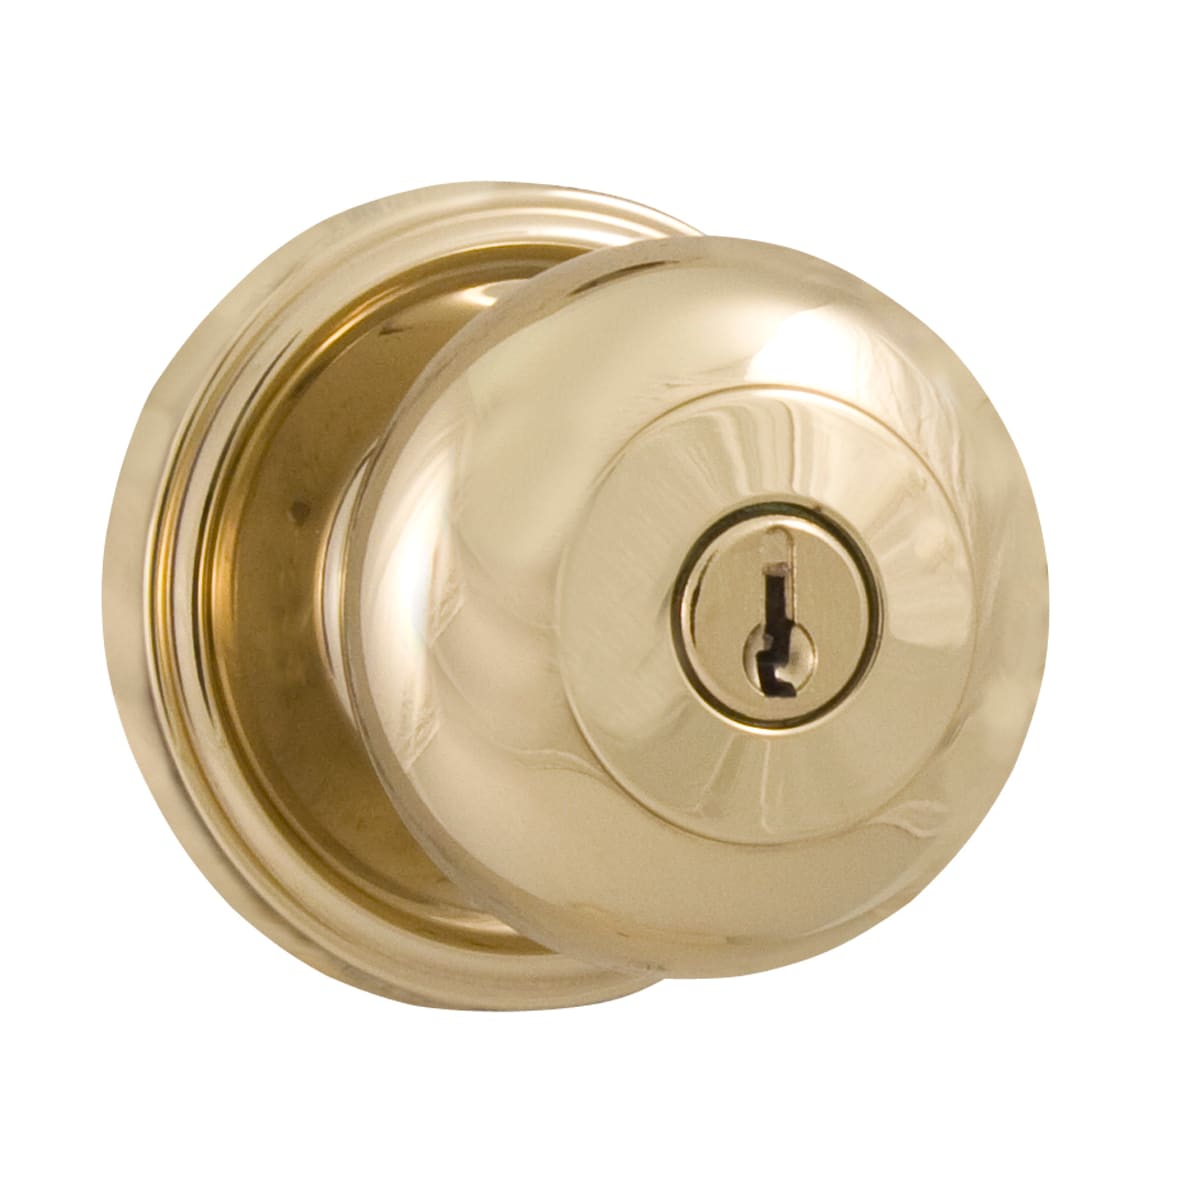 Keyed Entry Door Knob Installation - Door Lock , door knob 